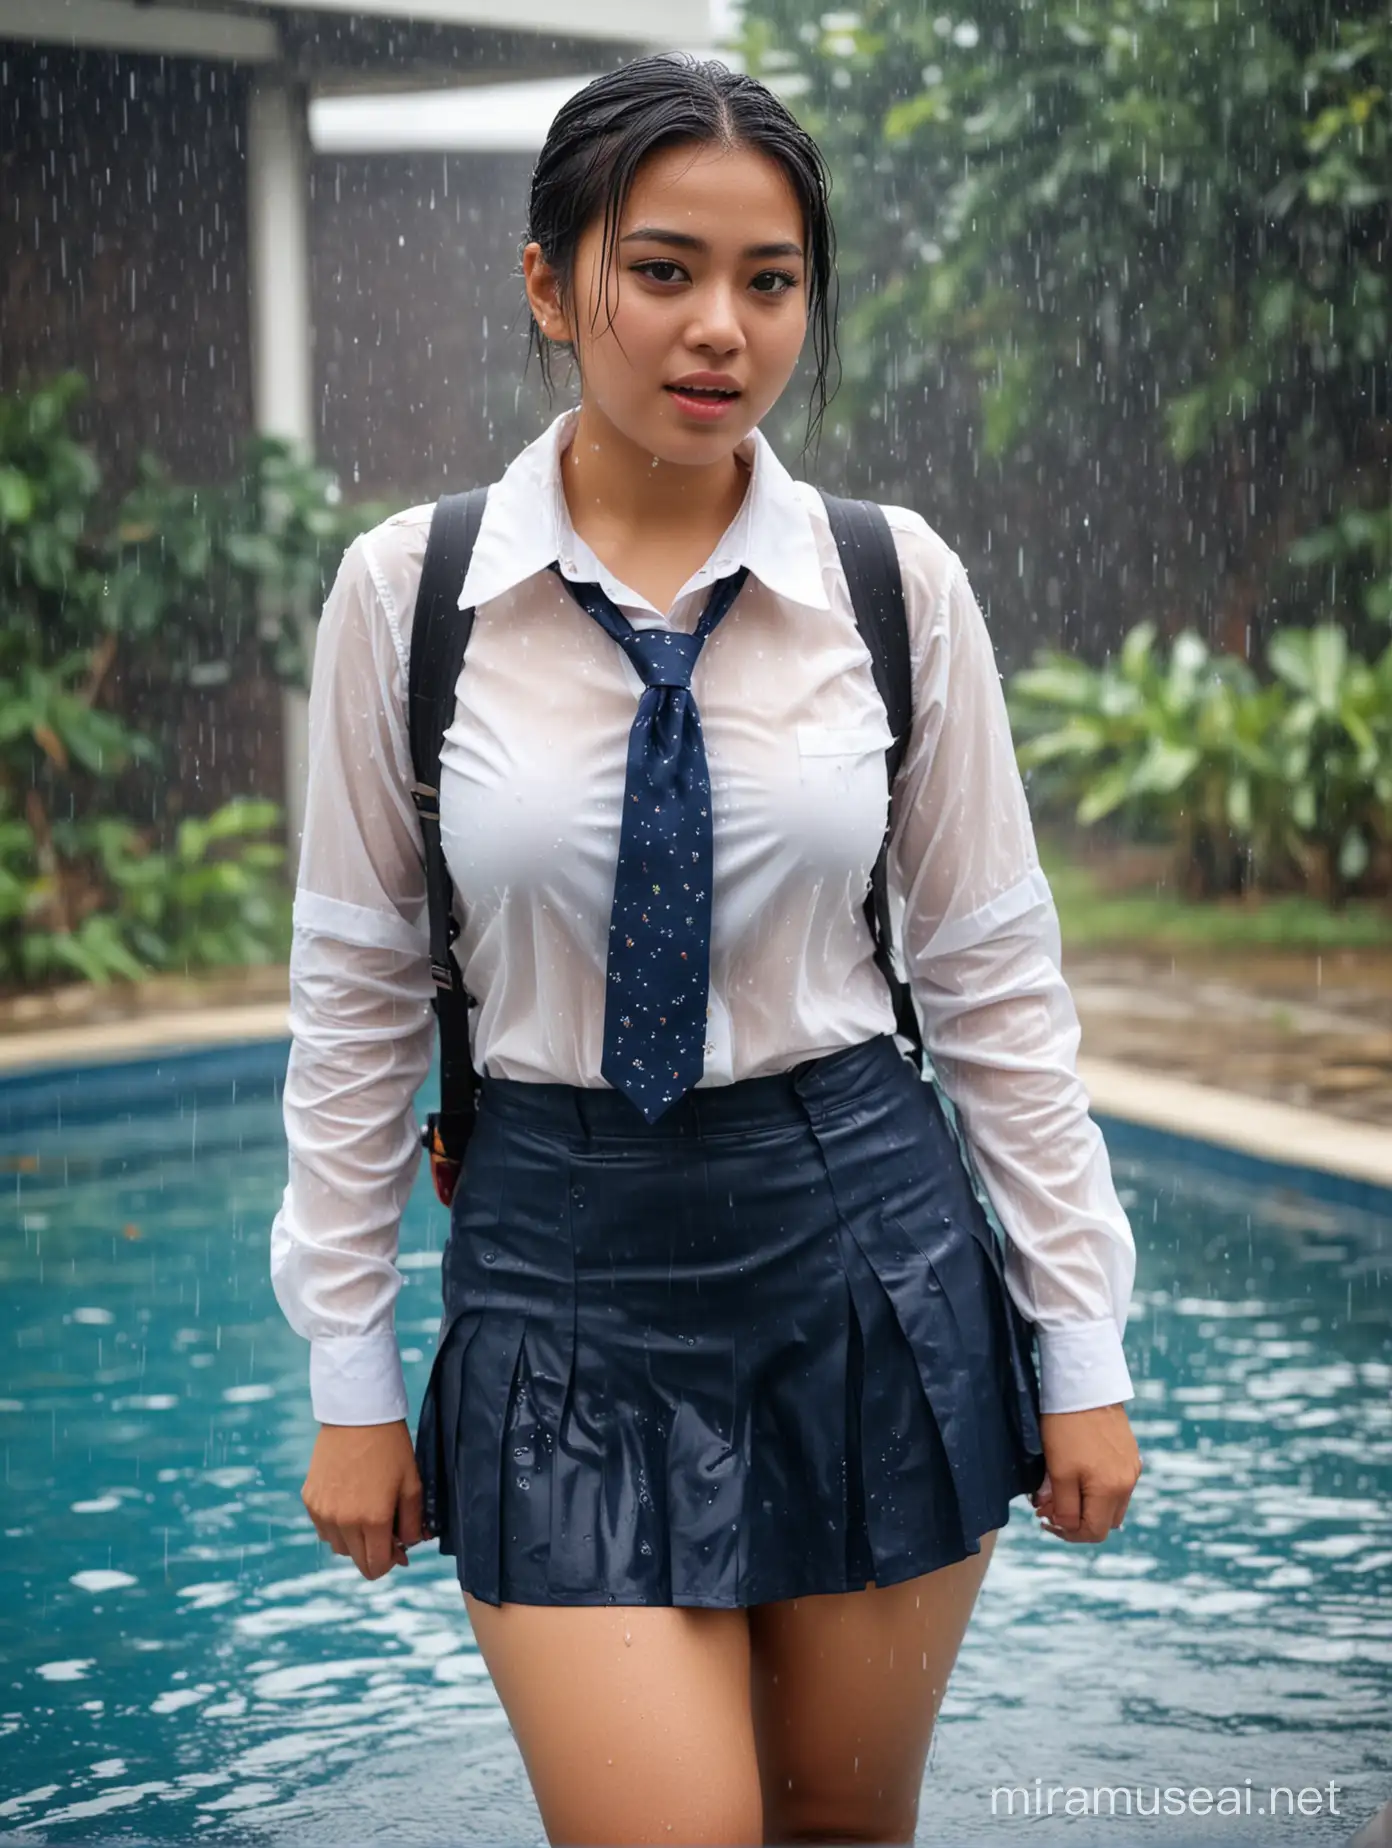 Malaysian Chubby Woman Soaking Wet in Downpour Rain